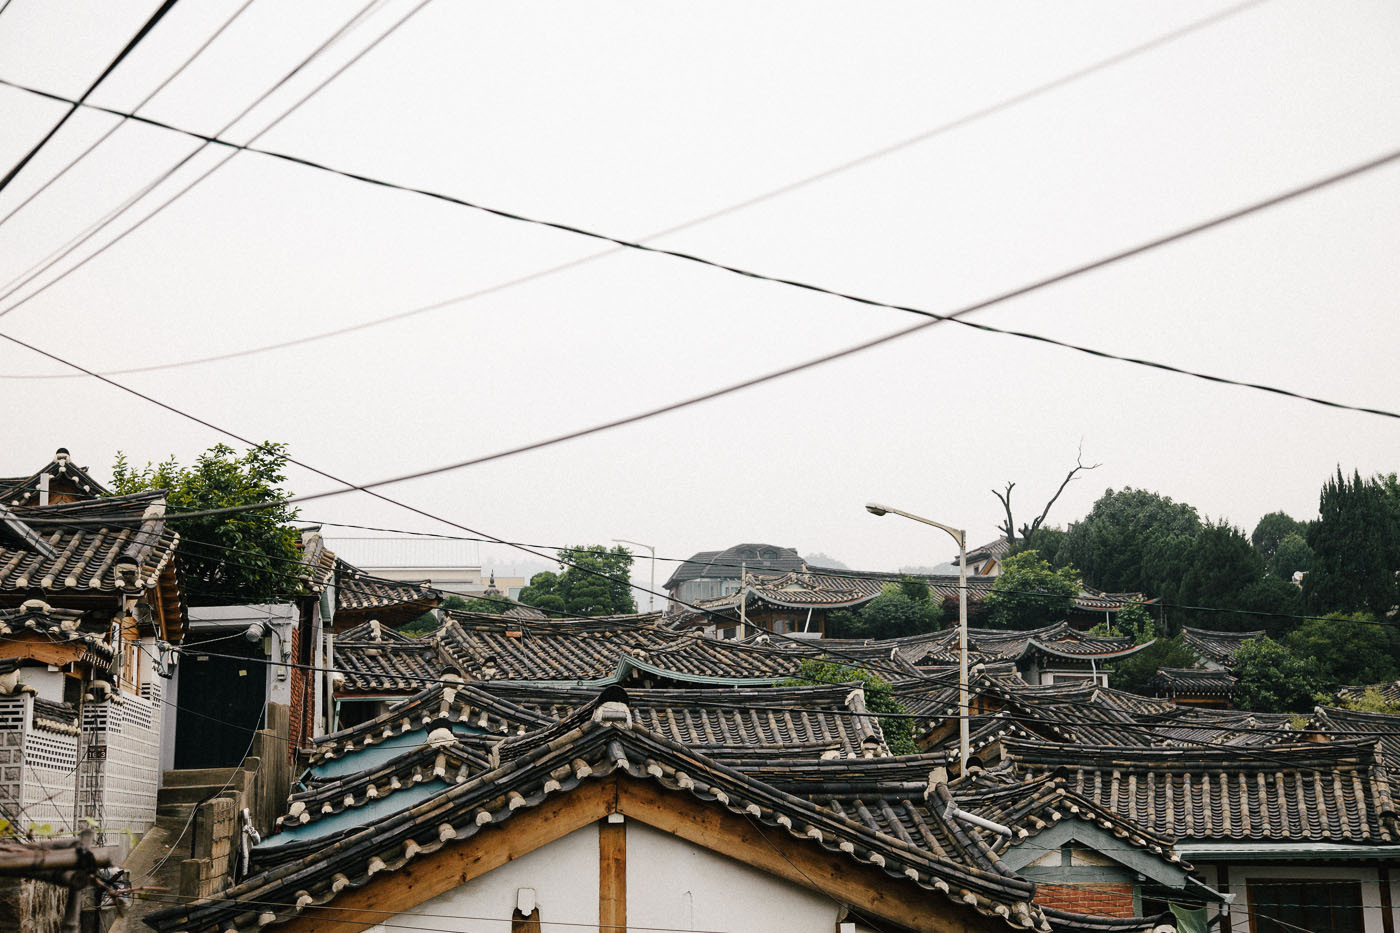 Rooftops in Bukchon, Seoul, South Korea